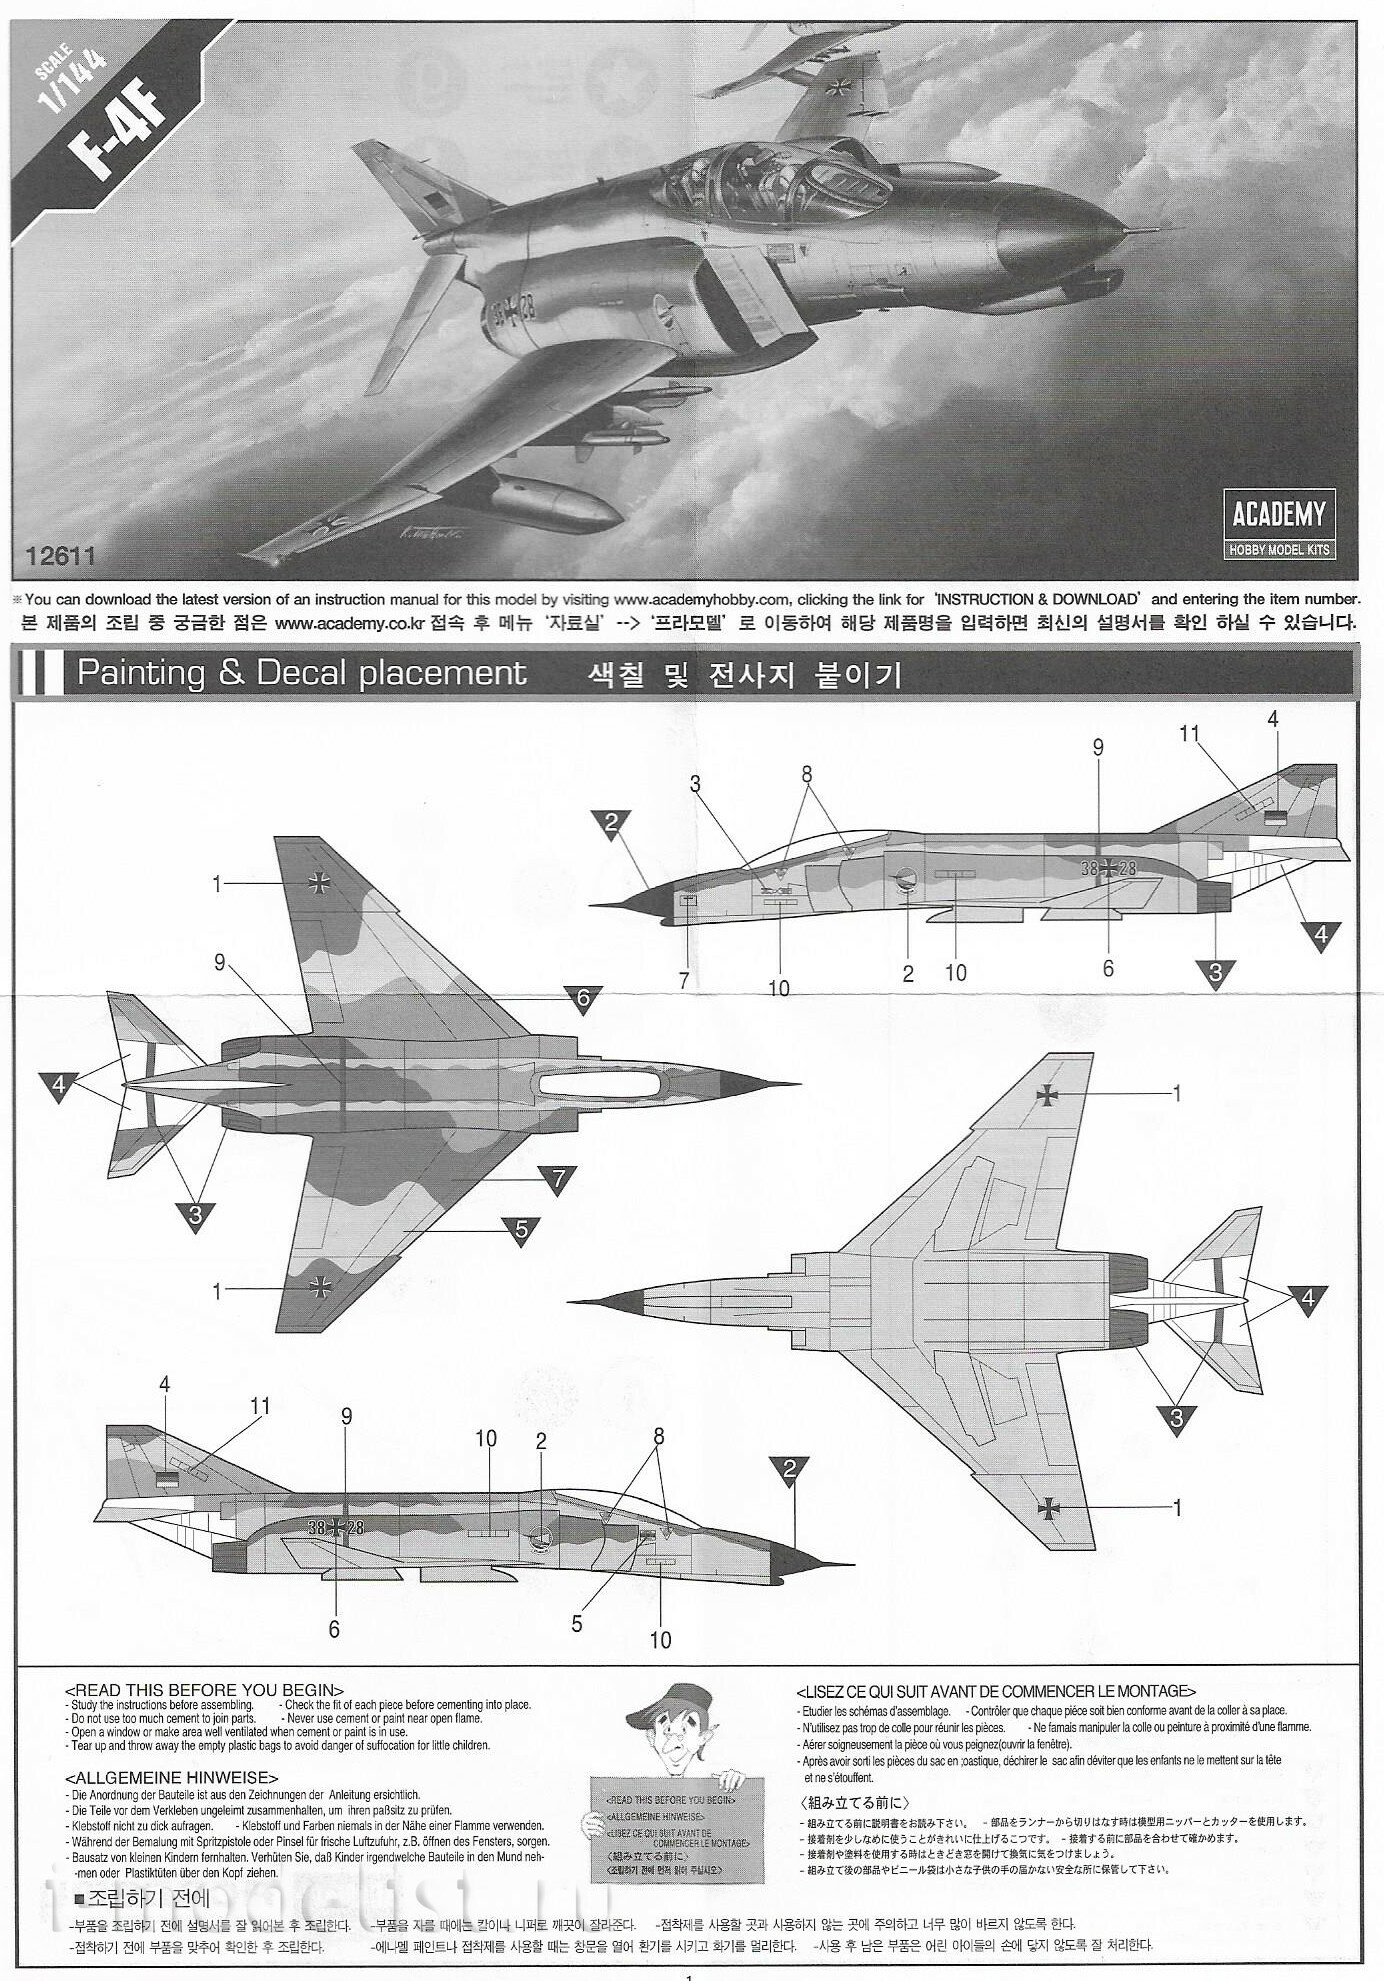 12611 Academy 1/144 Самолёт F-4F